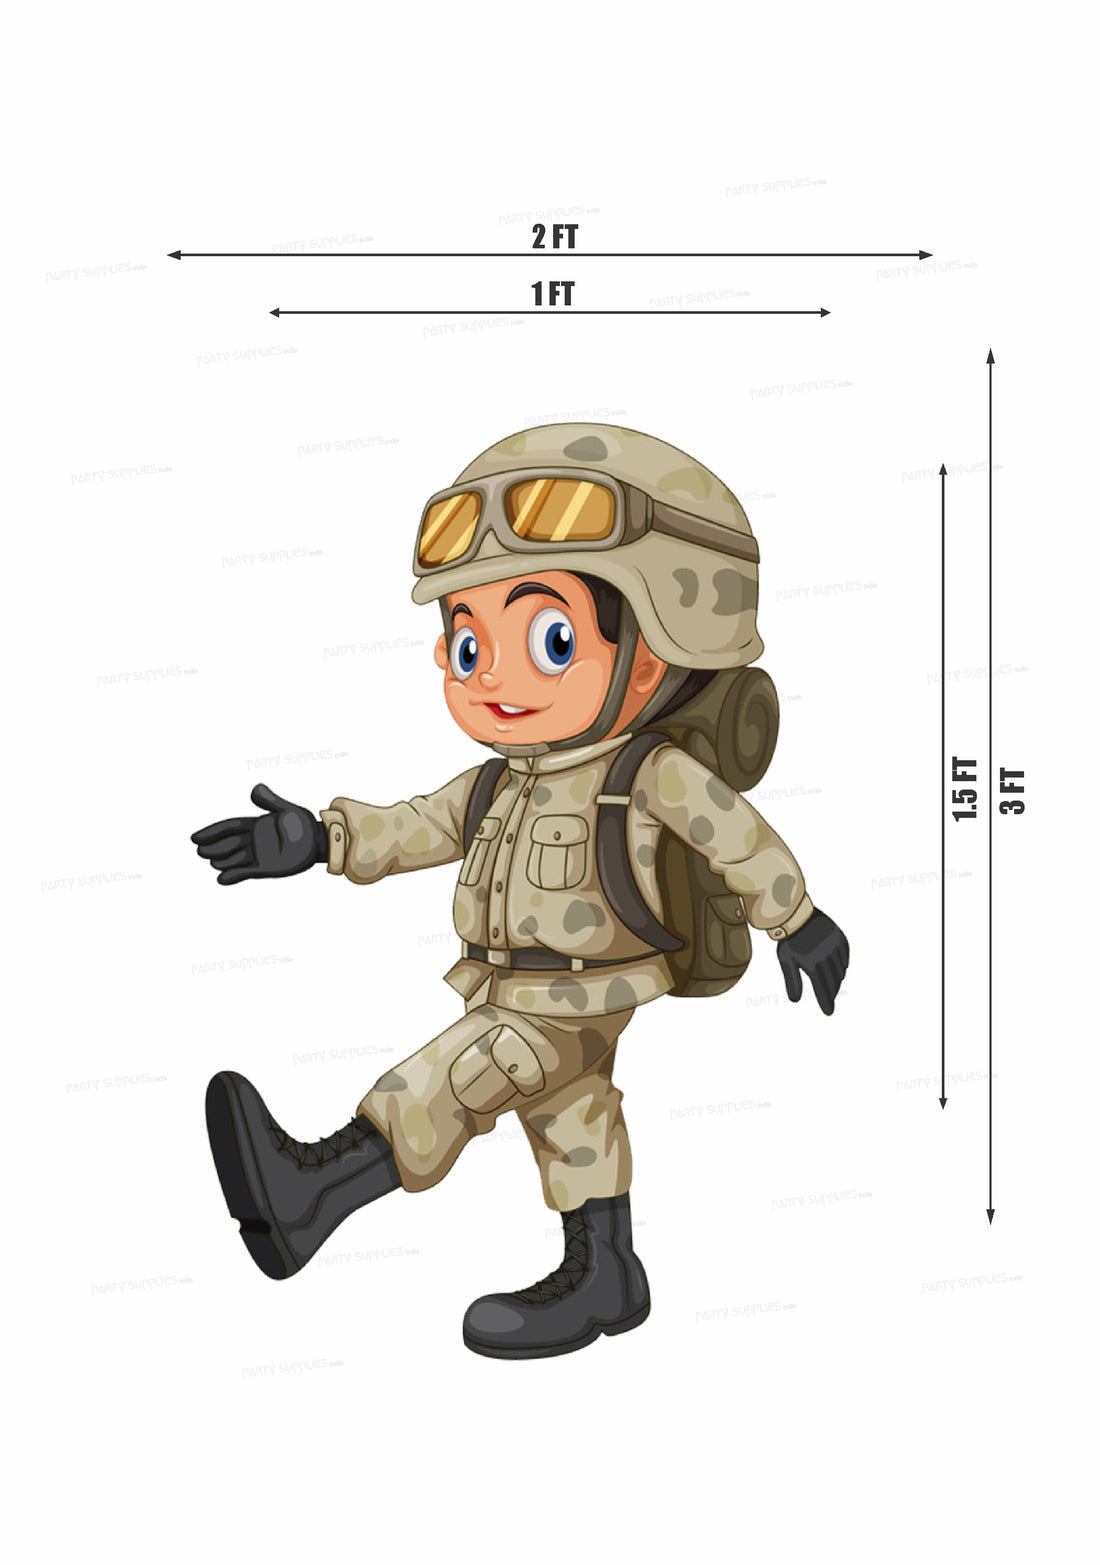 PSI Military Theme Cutout - 01